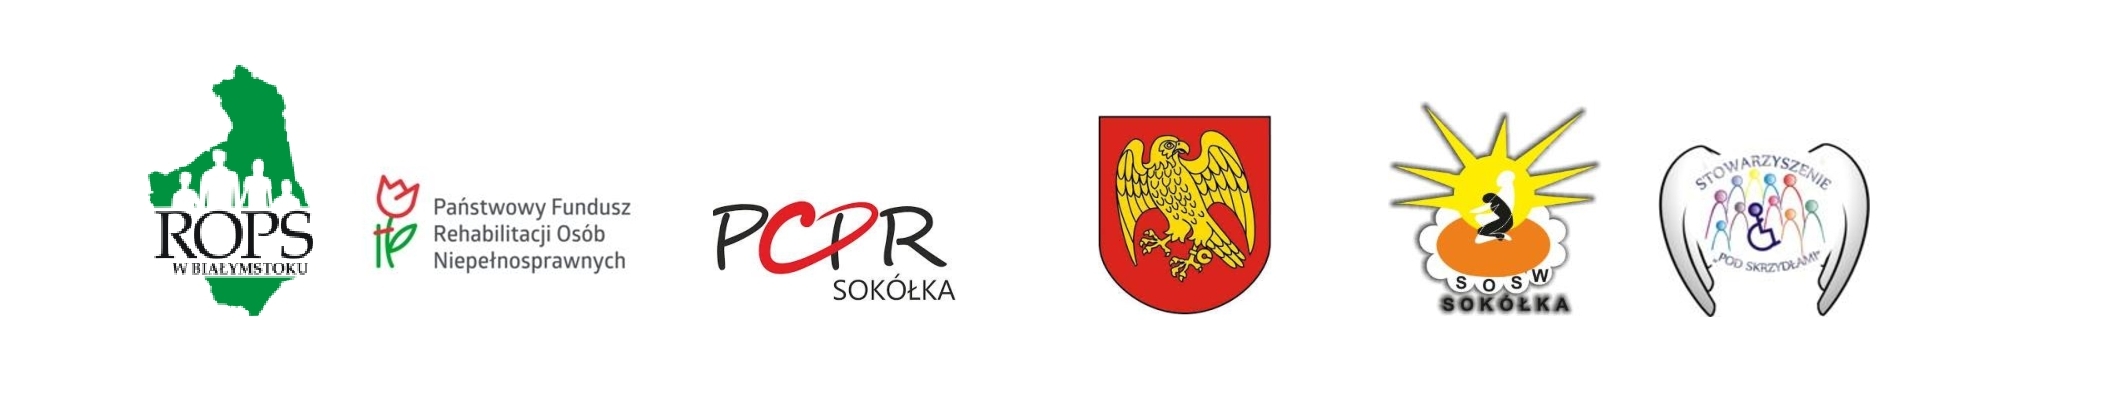 http://www.soswsokolka.pl/images/ogoszenie-logo.jpg